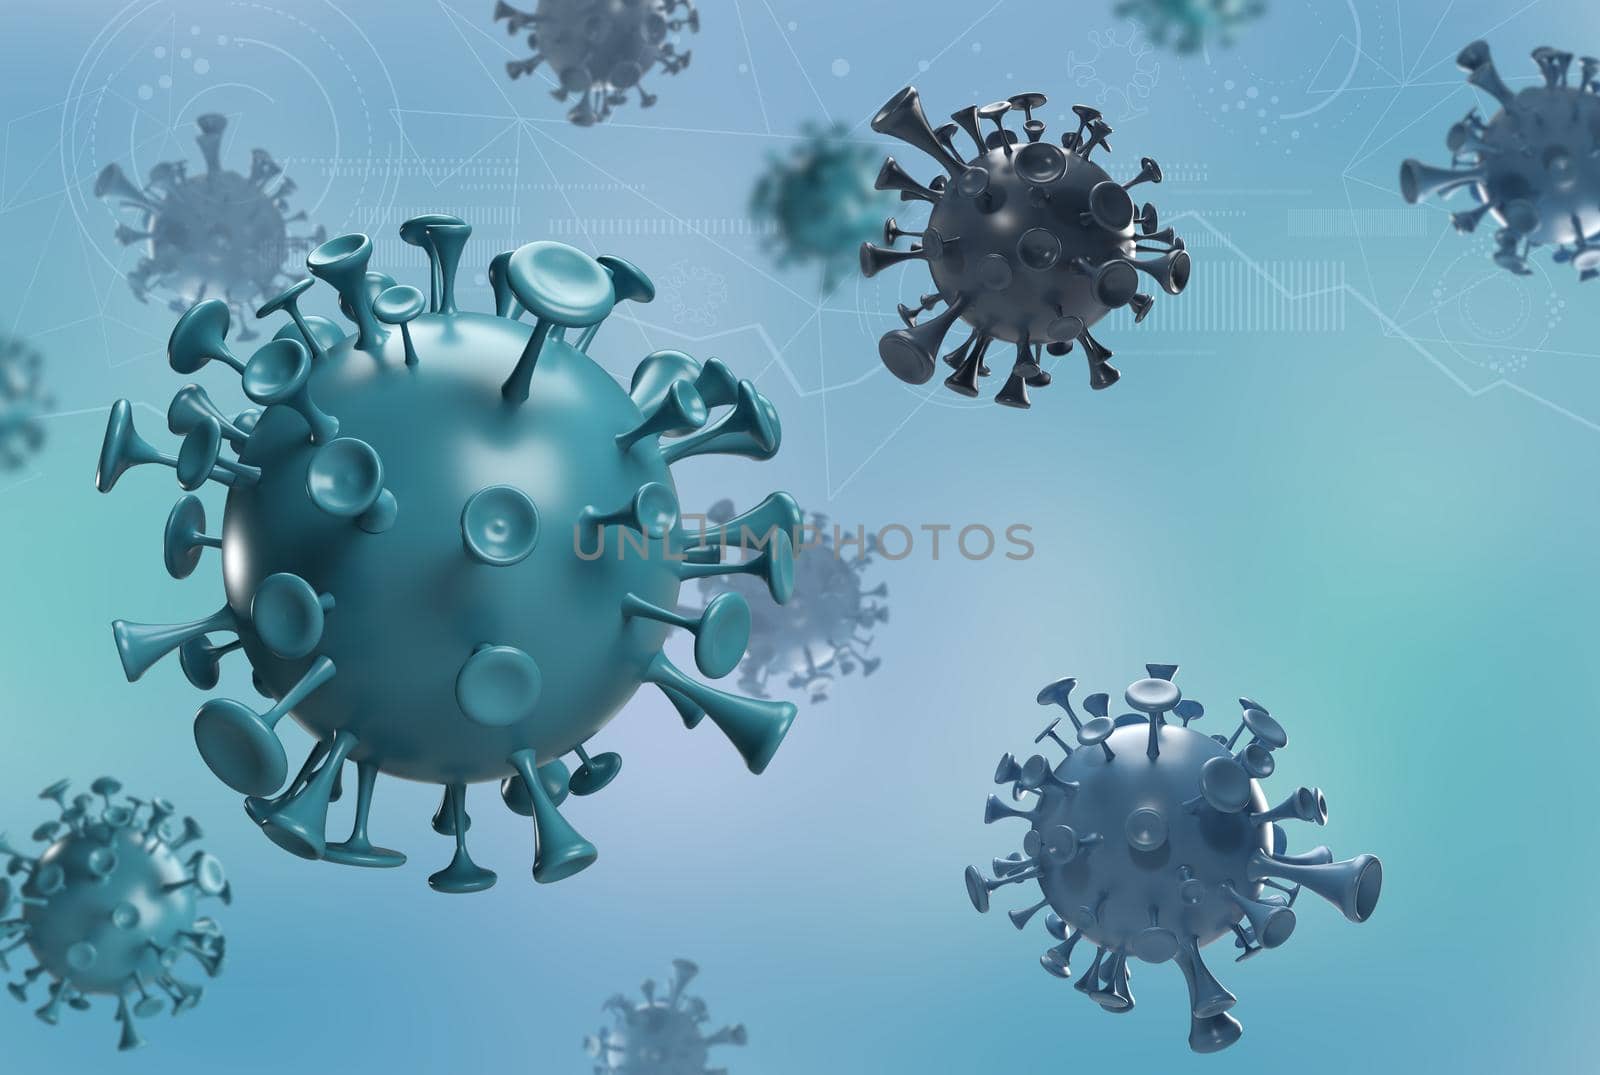 Abstract sciense 3d corona virus outbreak illustration by kisika